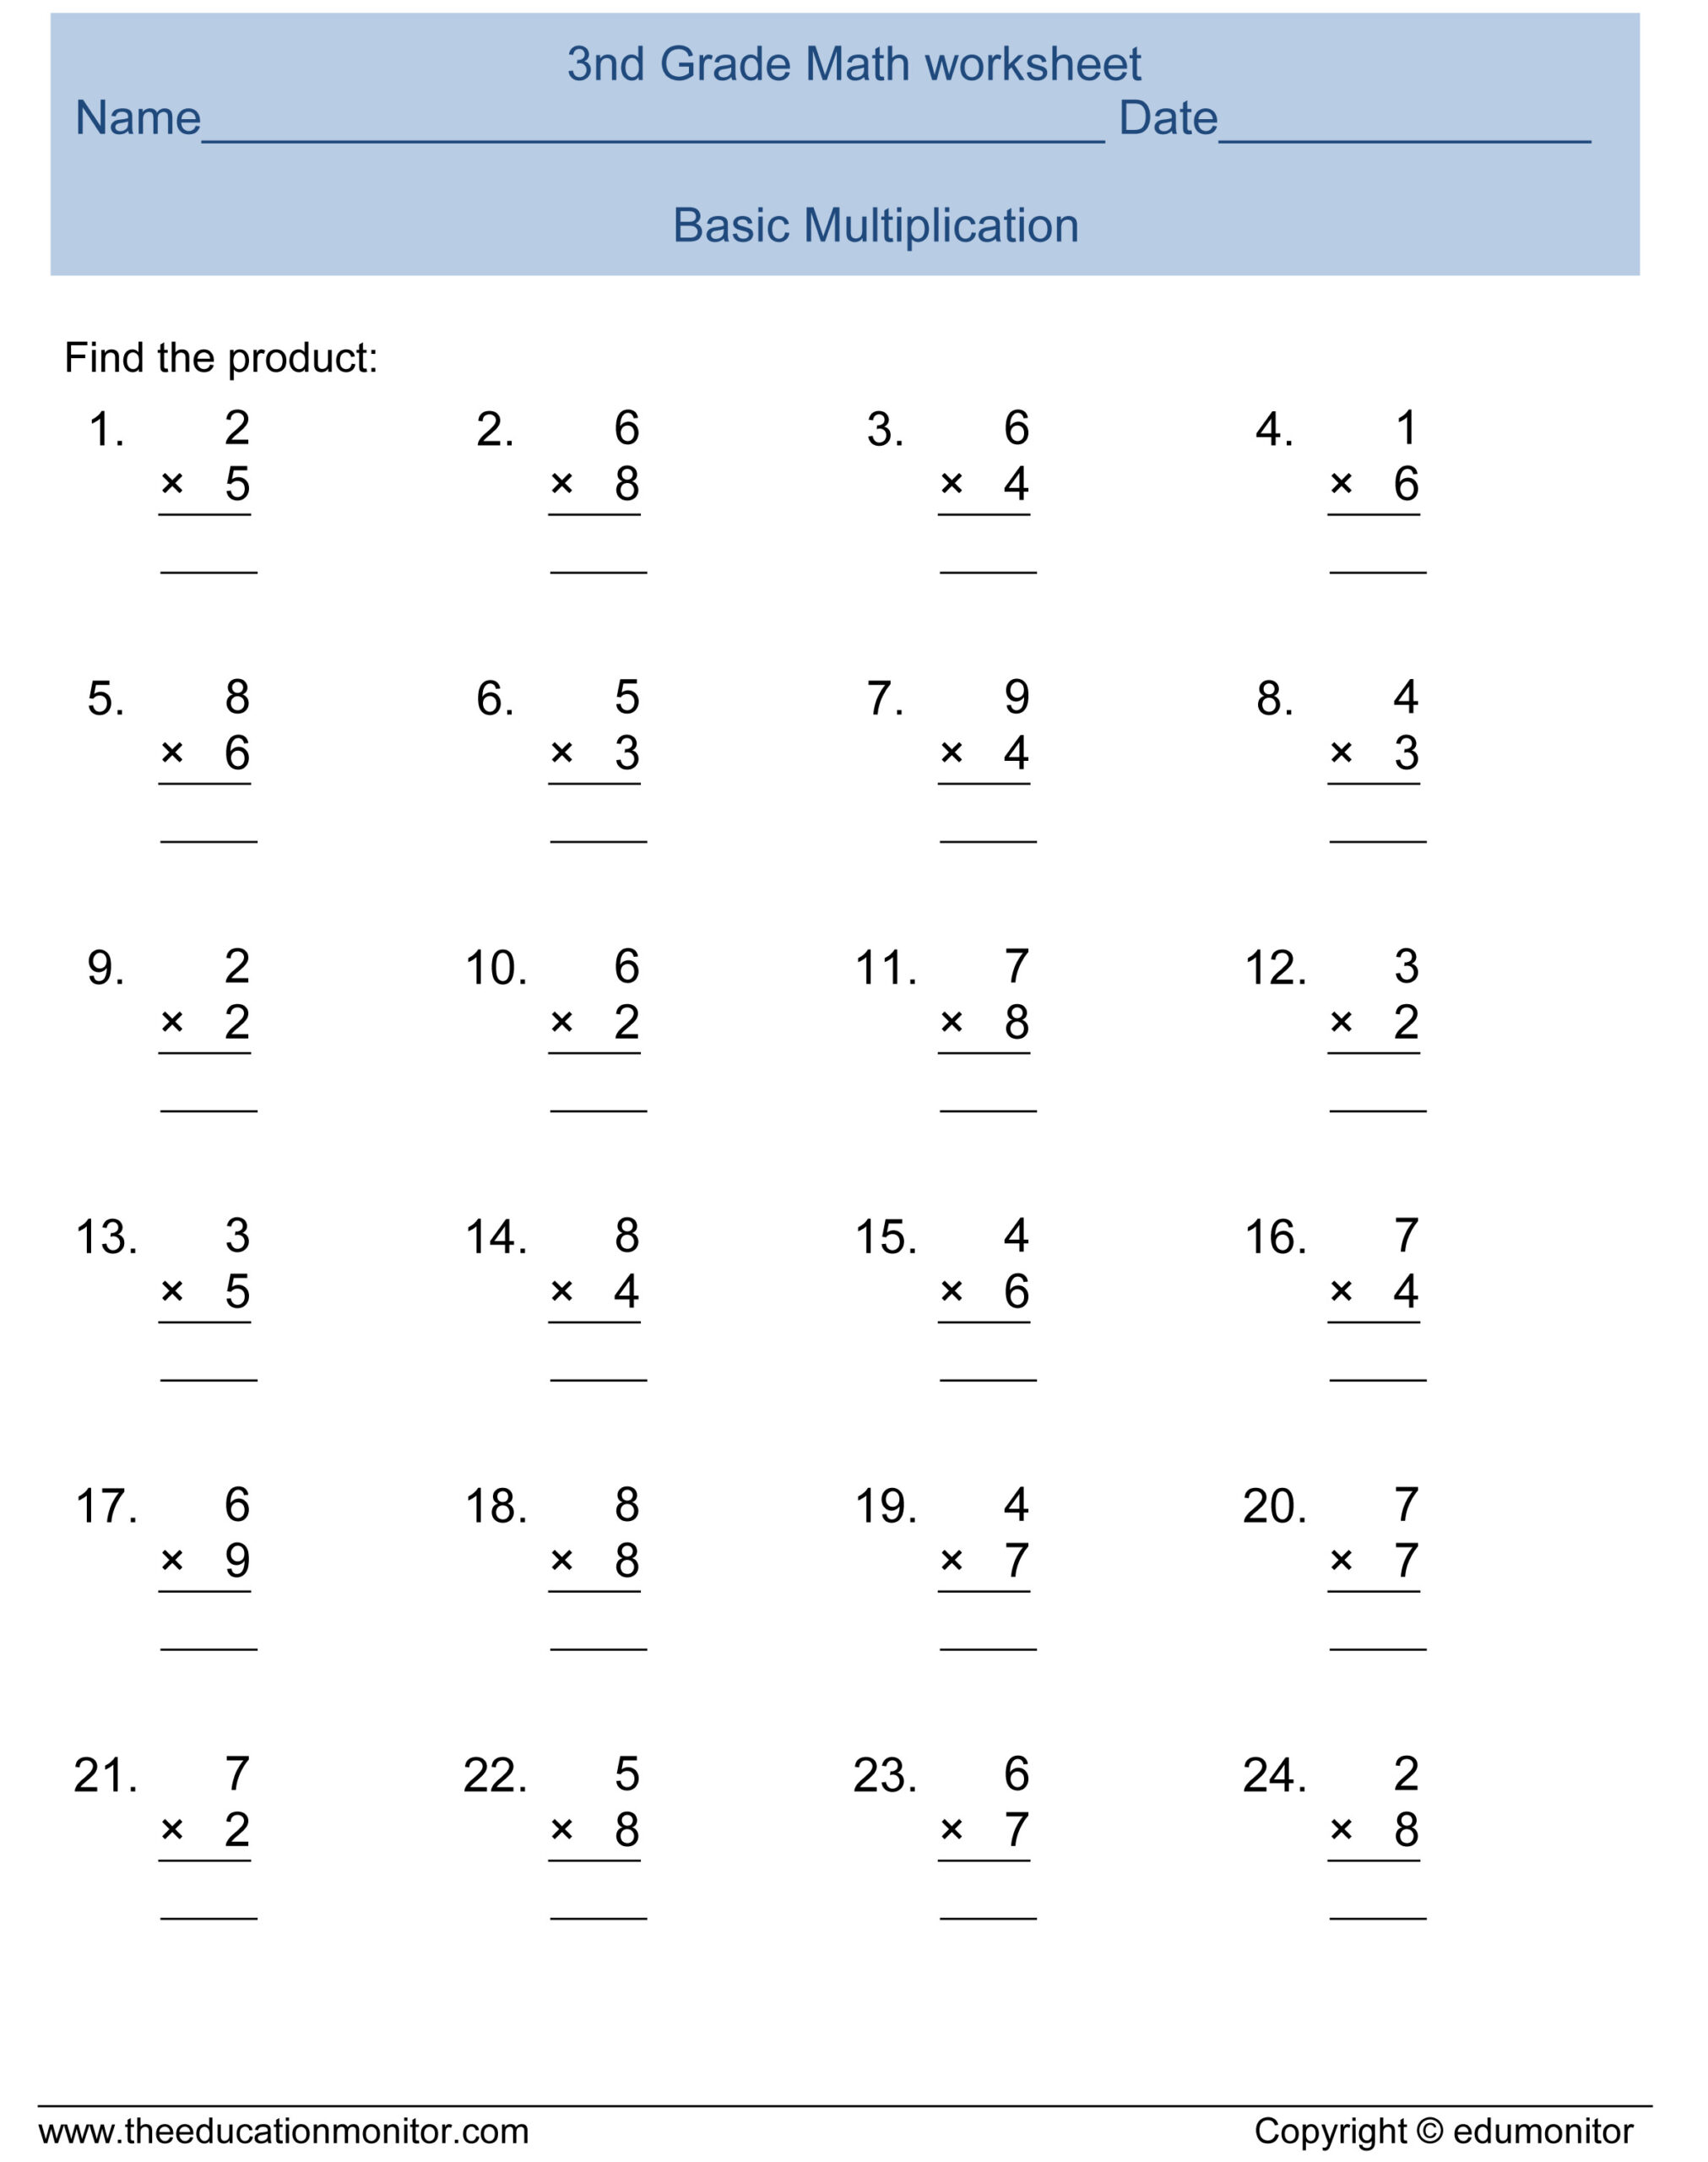 multiplication-practice-worksheets-3rd-grade-multiplication-worksheets